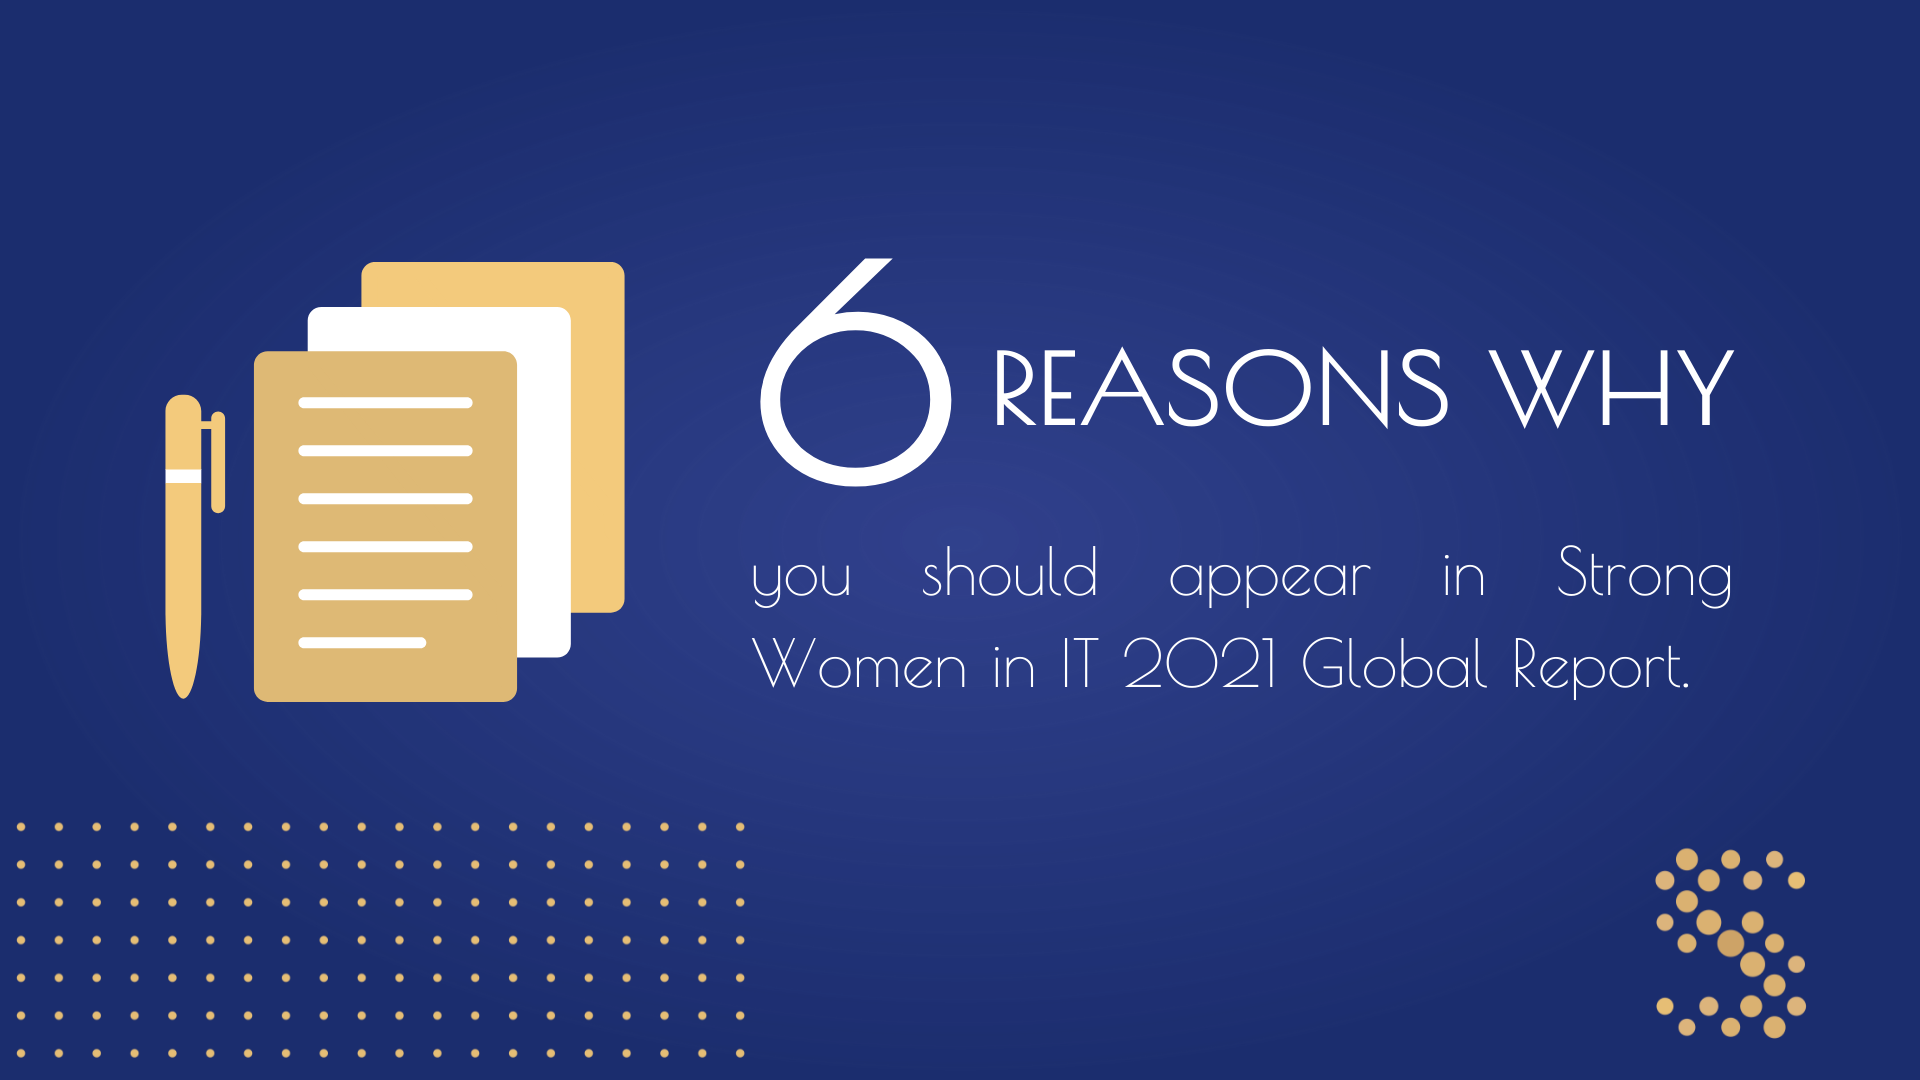 Strong Women in IT 2021 Global Report